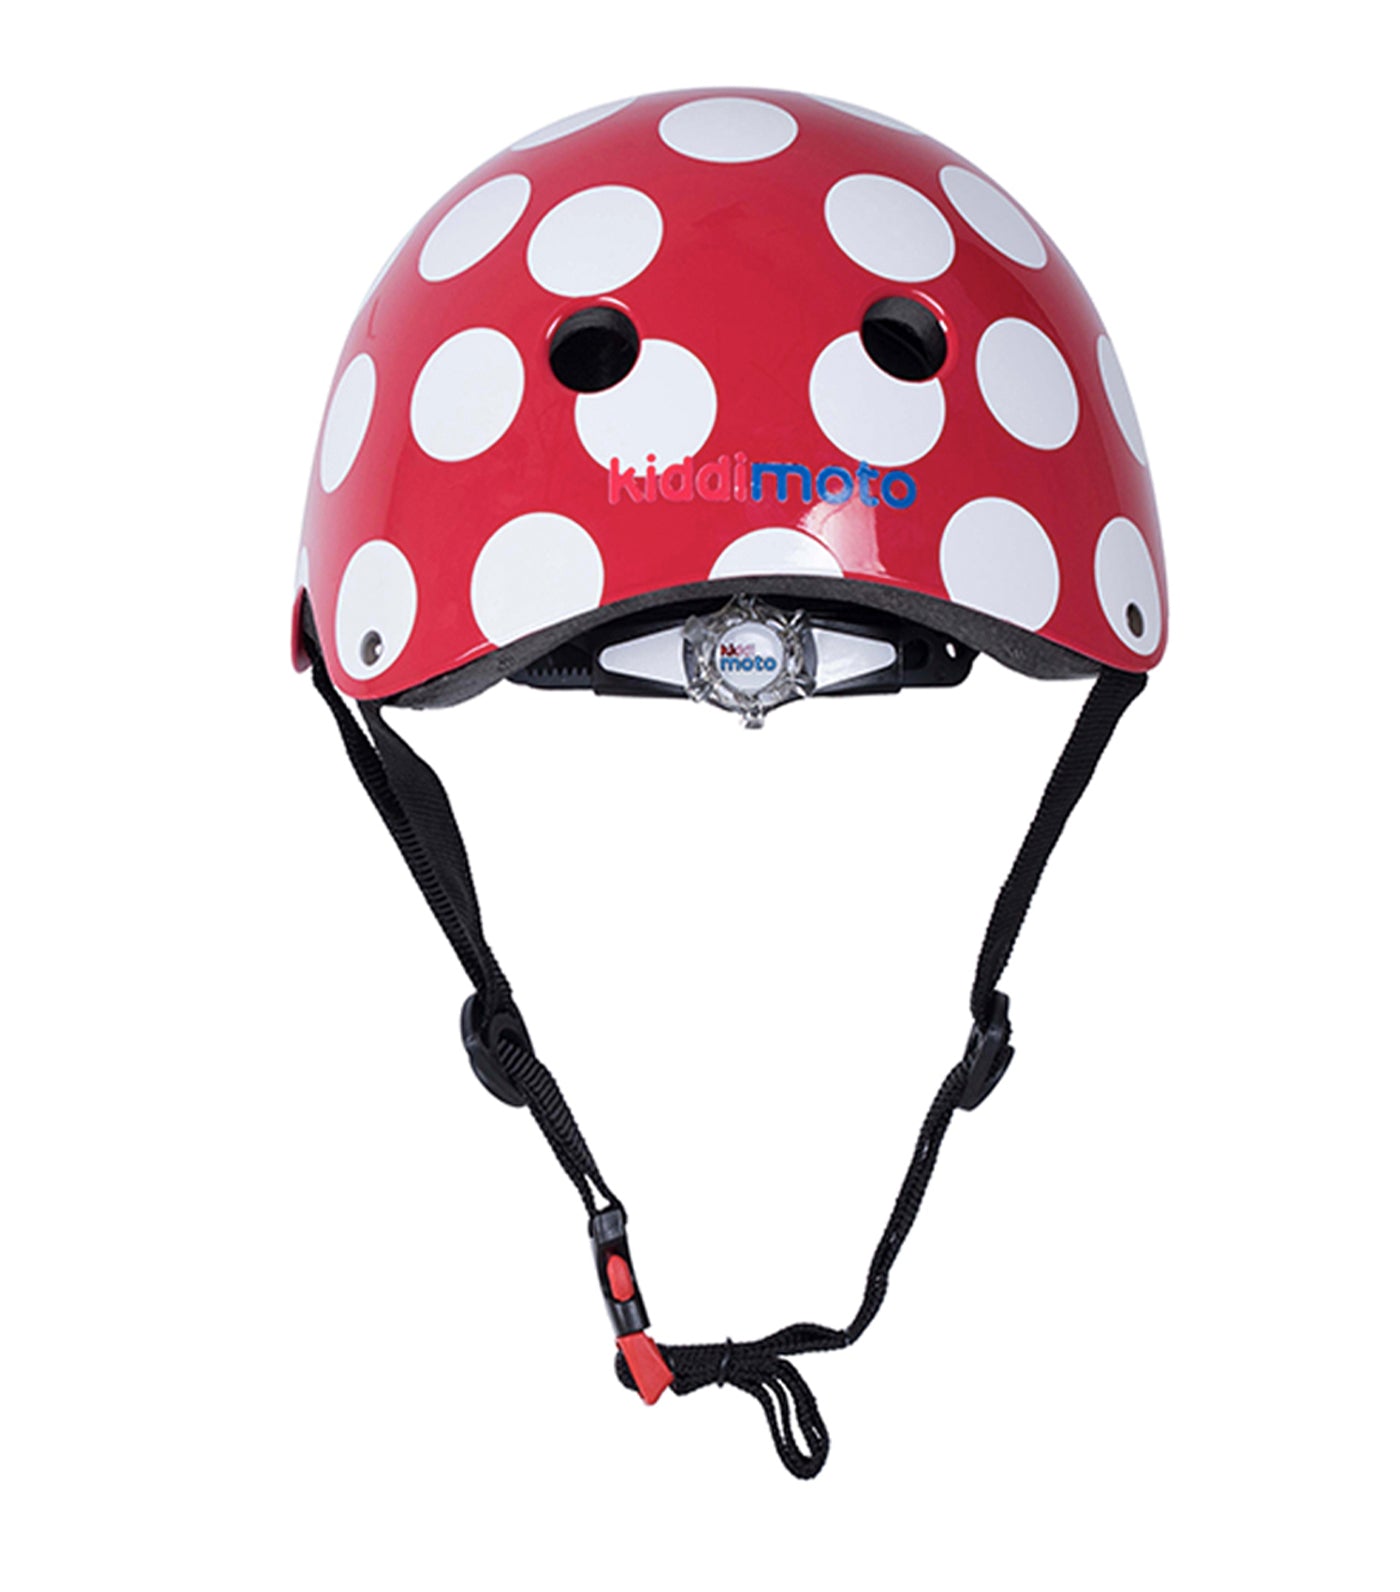 Kids Cycling Helmet - Red Dotty Small